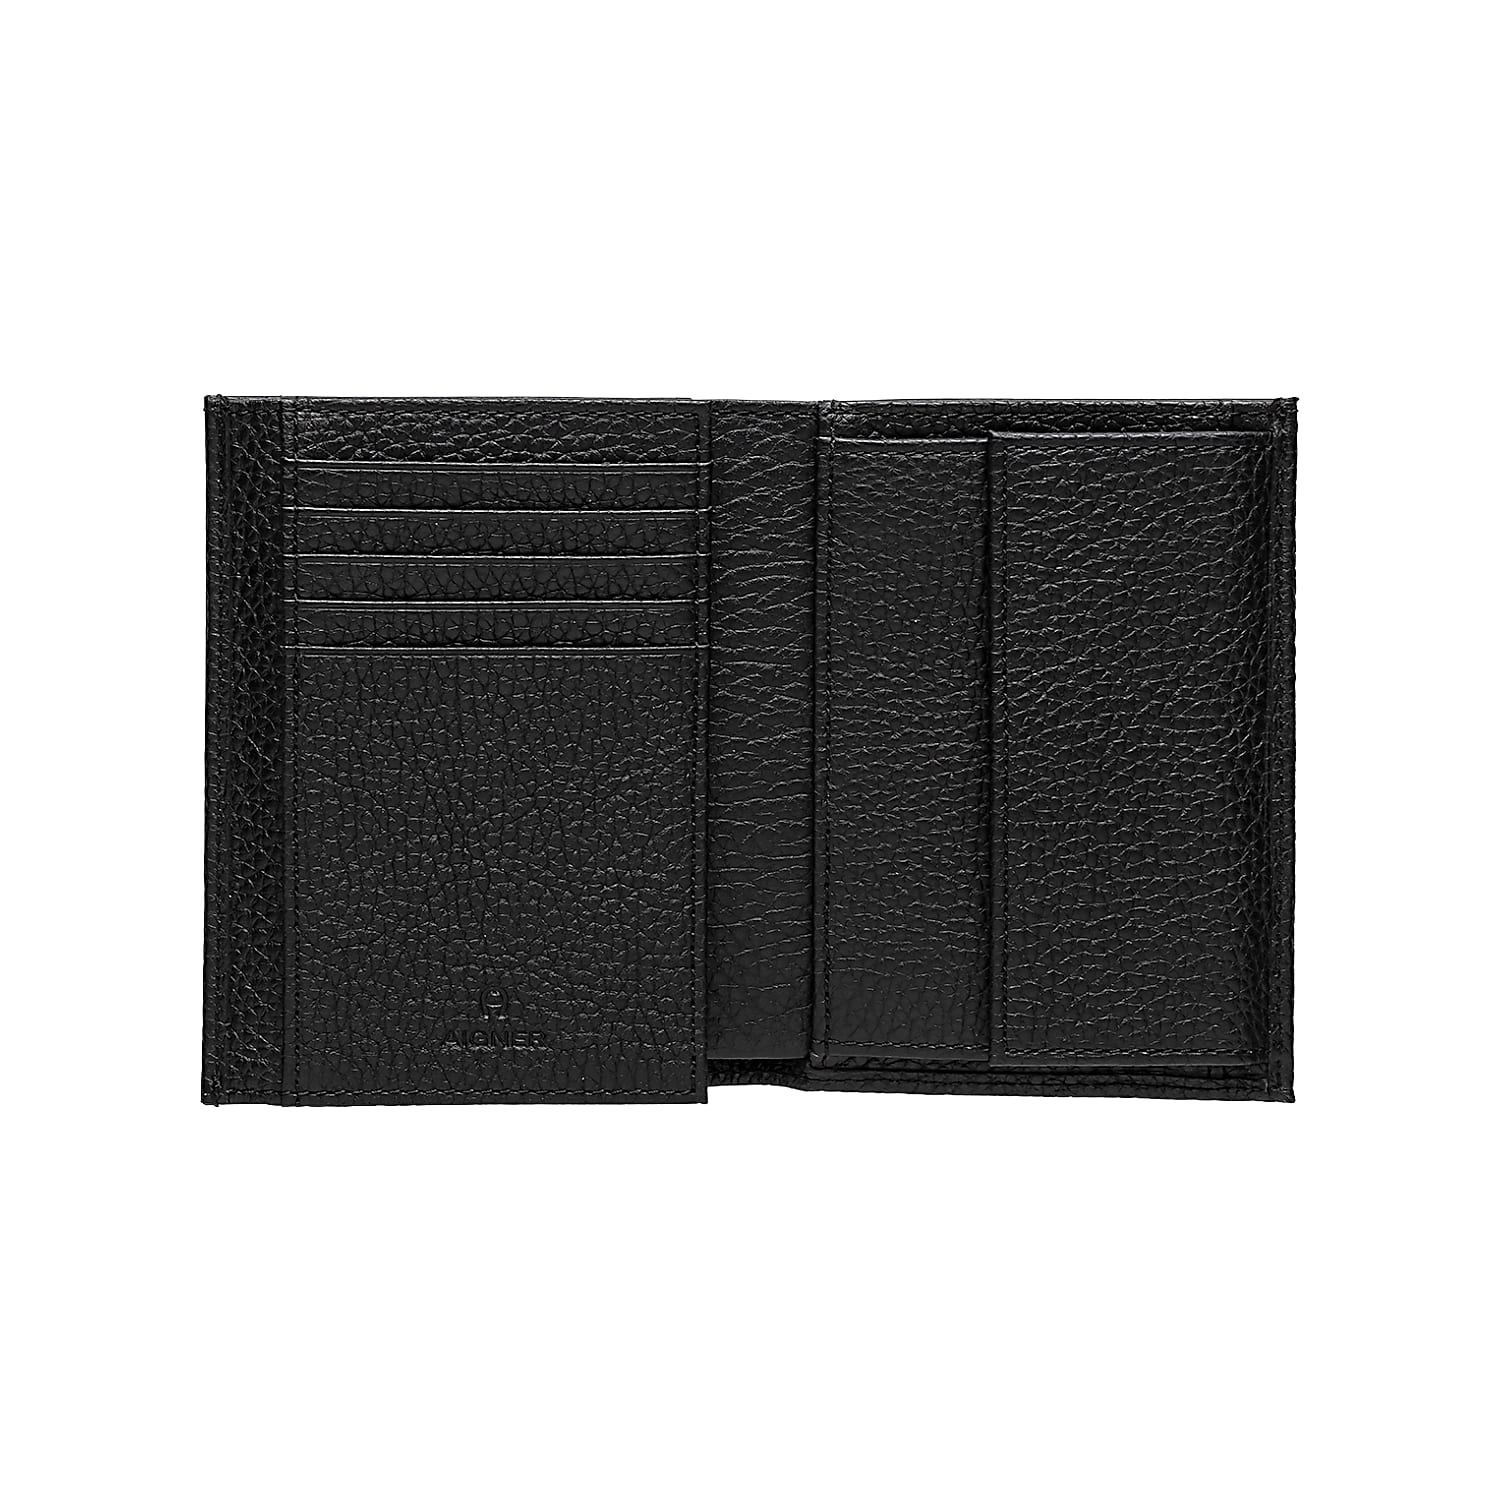 Basics Combination Wallet Upright